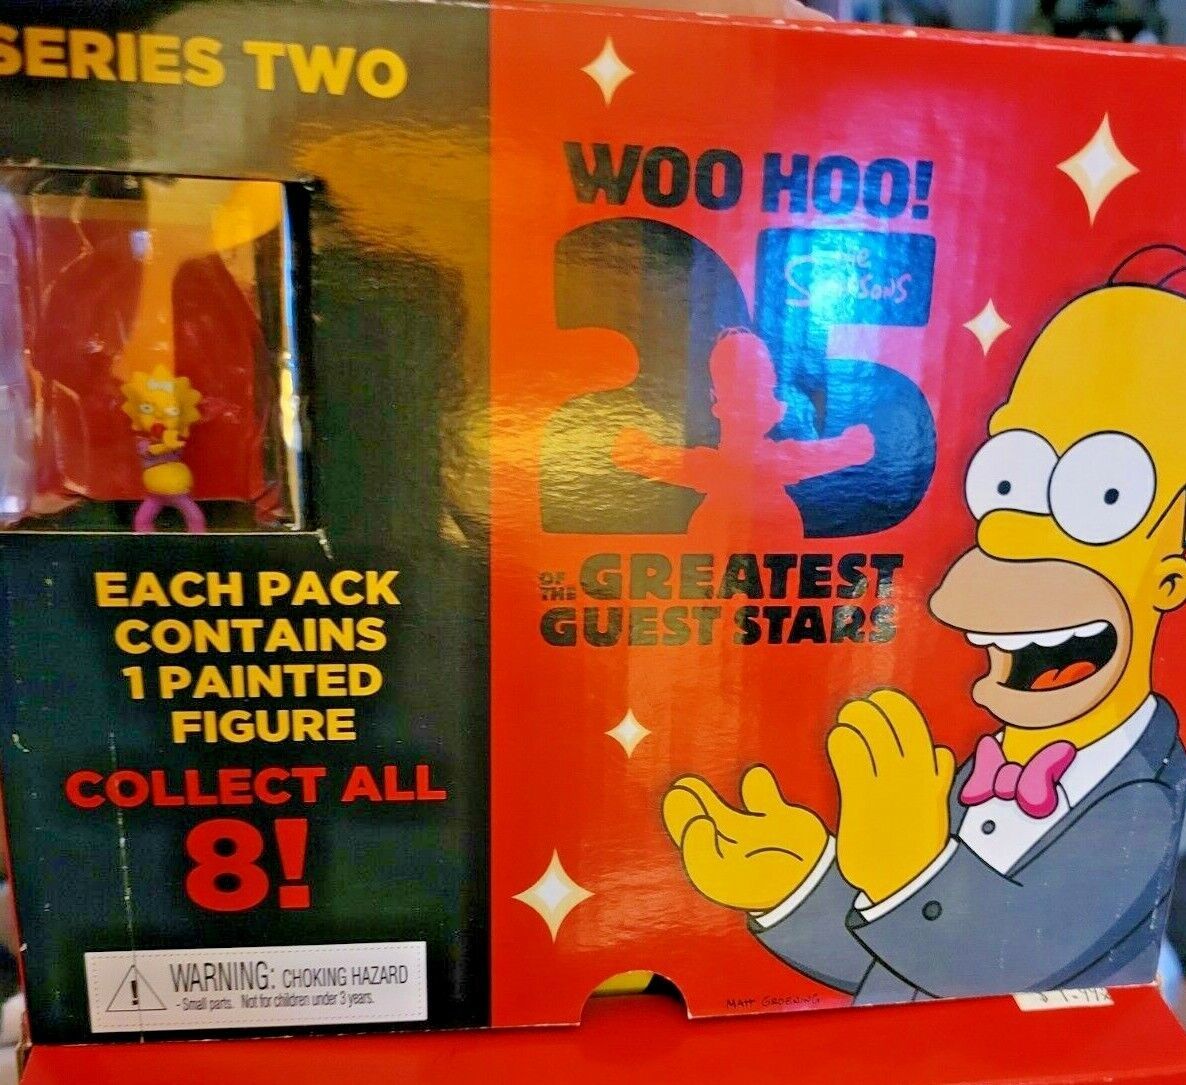 Simpsons 25th Anniversary Minifigure Series 2 Neca Wizkids - YOU CHOOSE   - $7.49 - $64.99